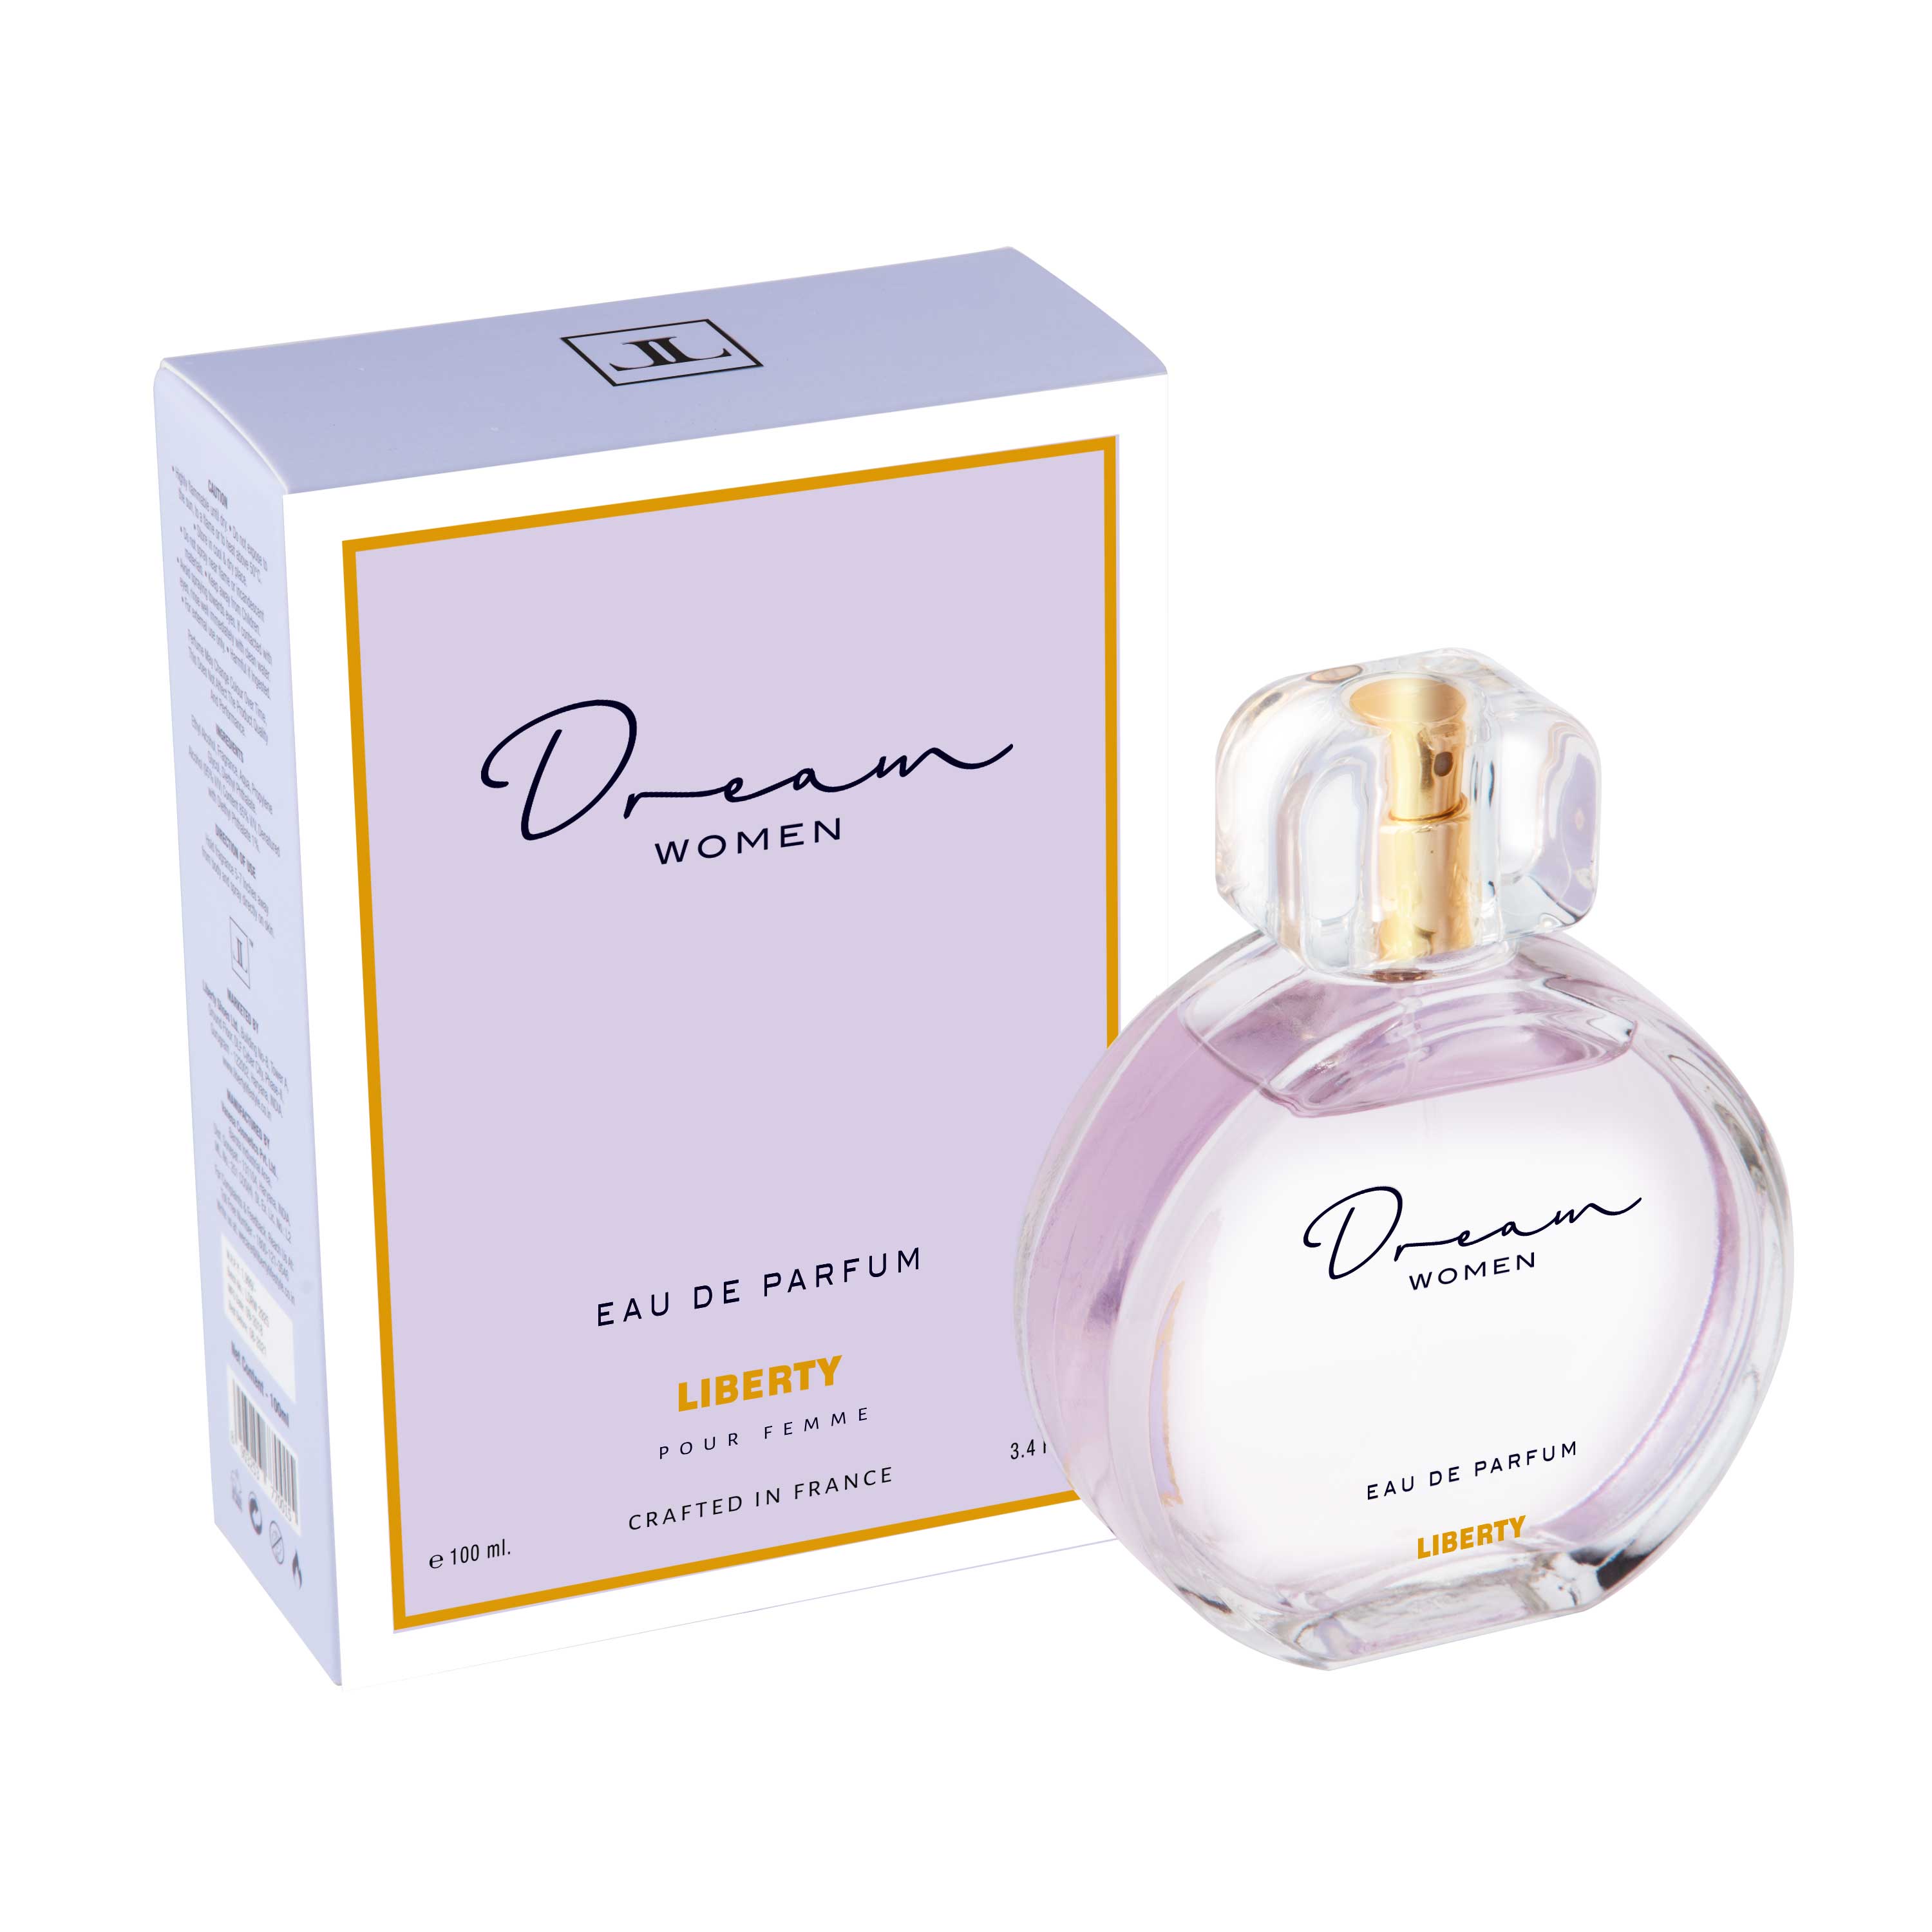 DREAM WOMEN - Eau De Perfume from LIBERTY LIFESTYLE